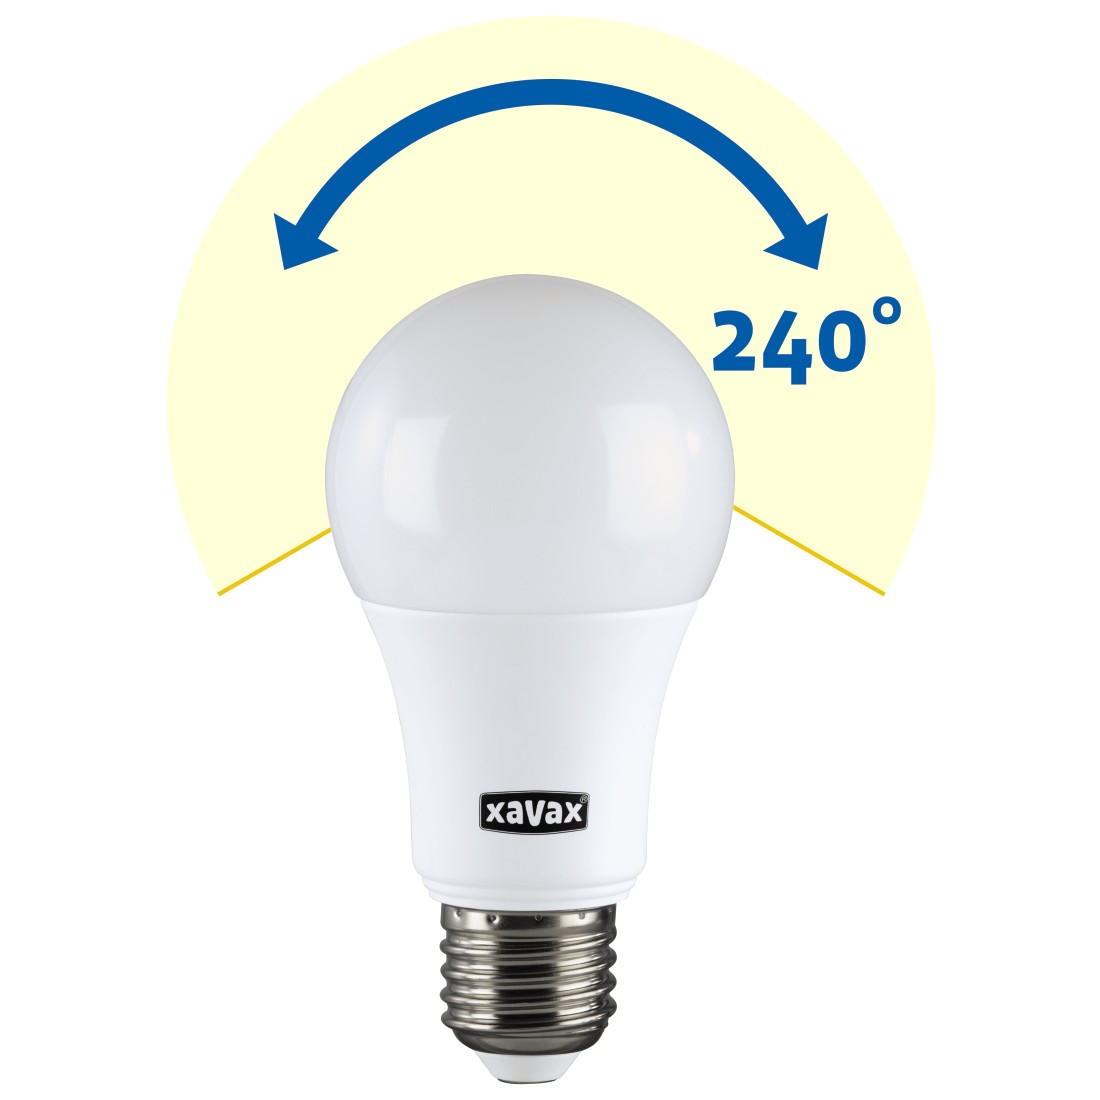 awx Druckfähige Anwendung - Xavax, LED-Lampe, E27, 806lm ersetzt 60W Glühlampe, Warmweiß, RA90